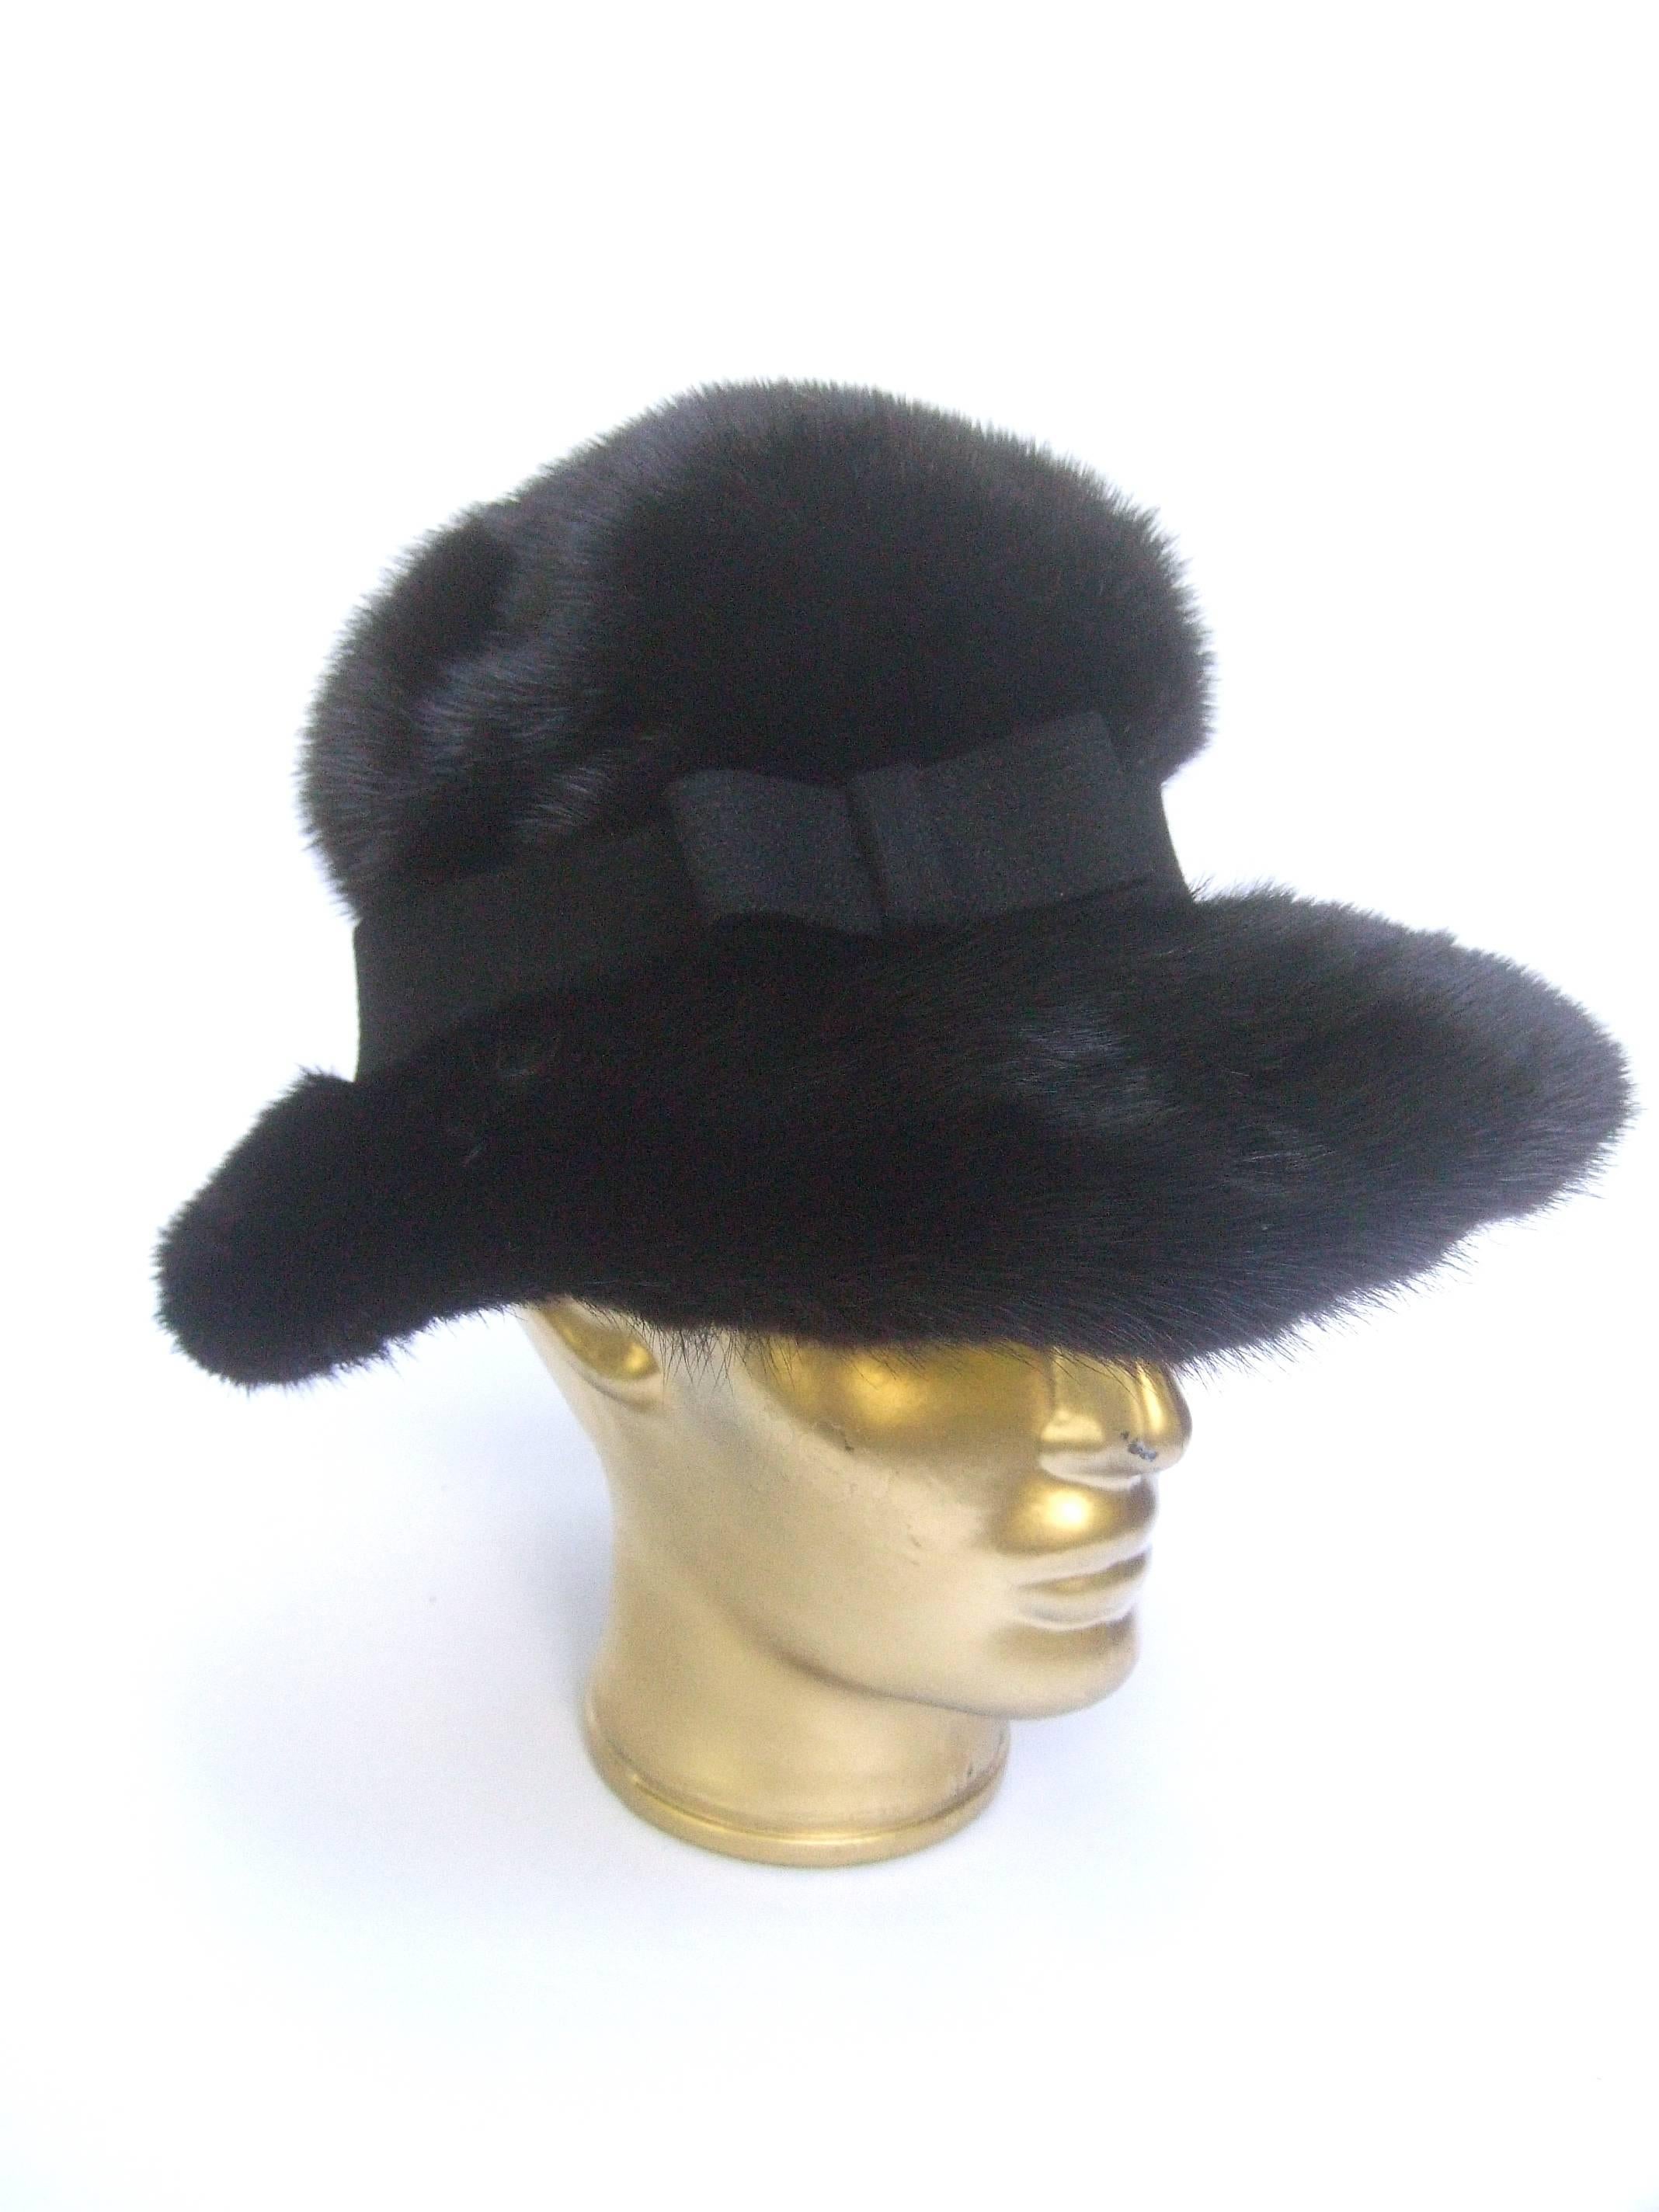 Black Saks Fifth Avenue Plush Mink Fedora Style Hat c 1970